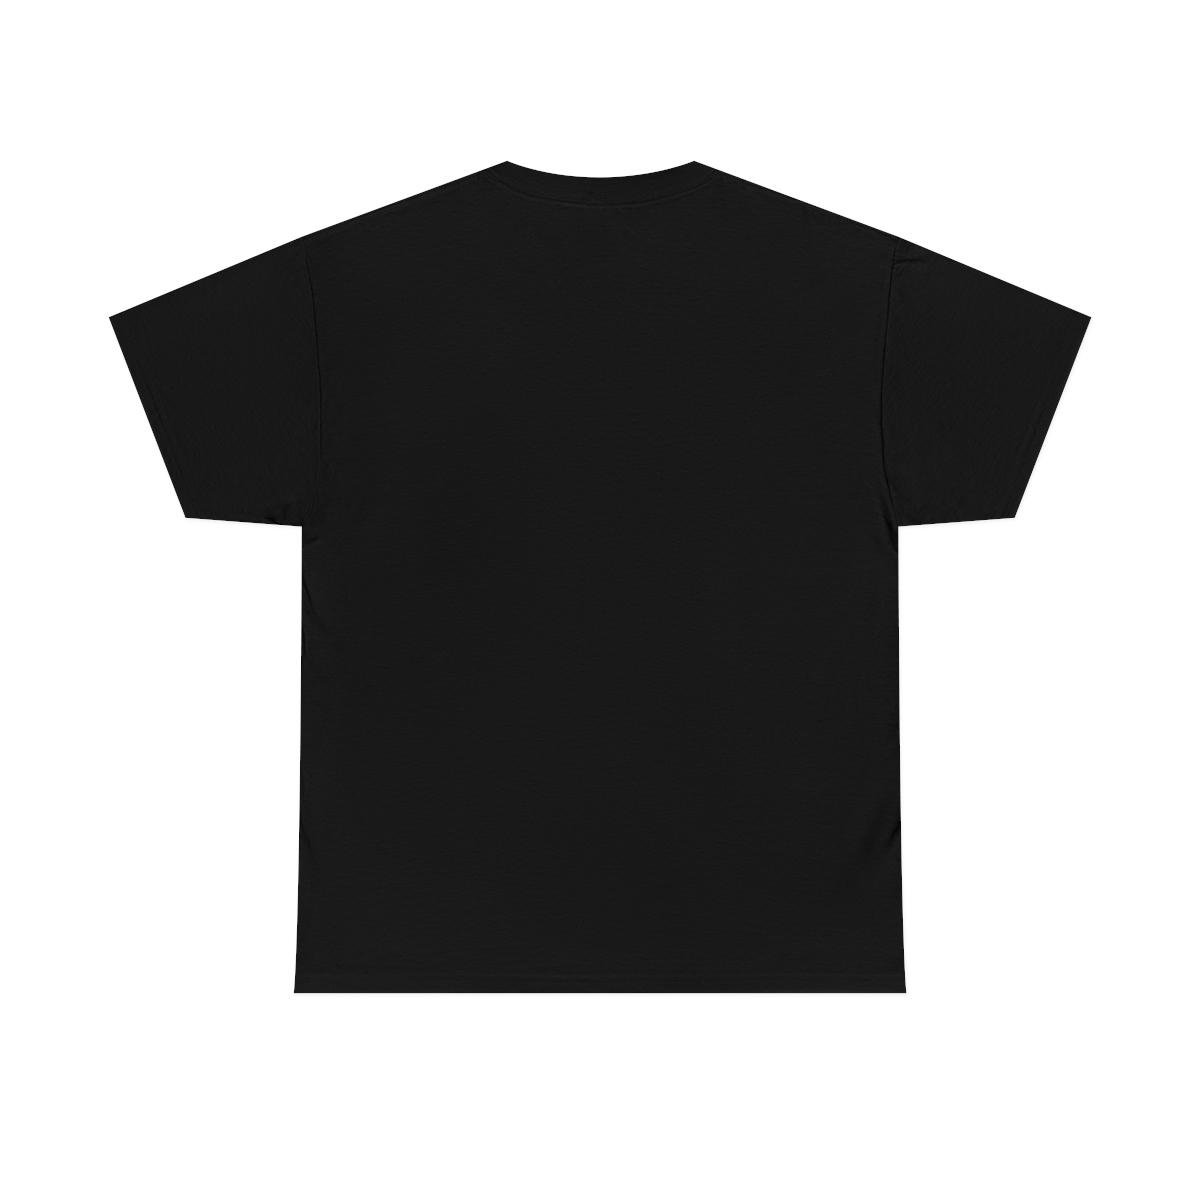 Ignescent Logo Short Sleeve Tshirt